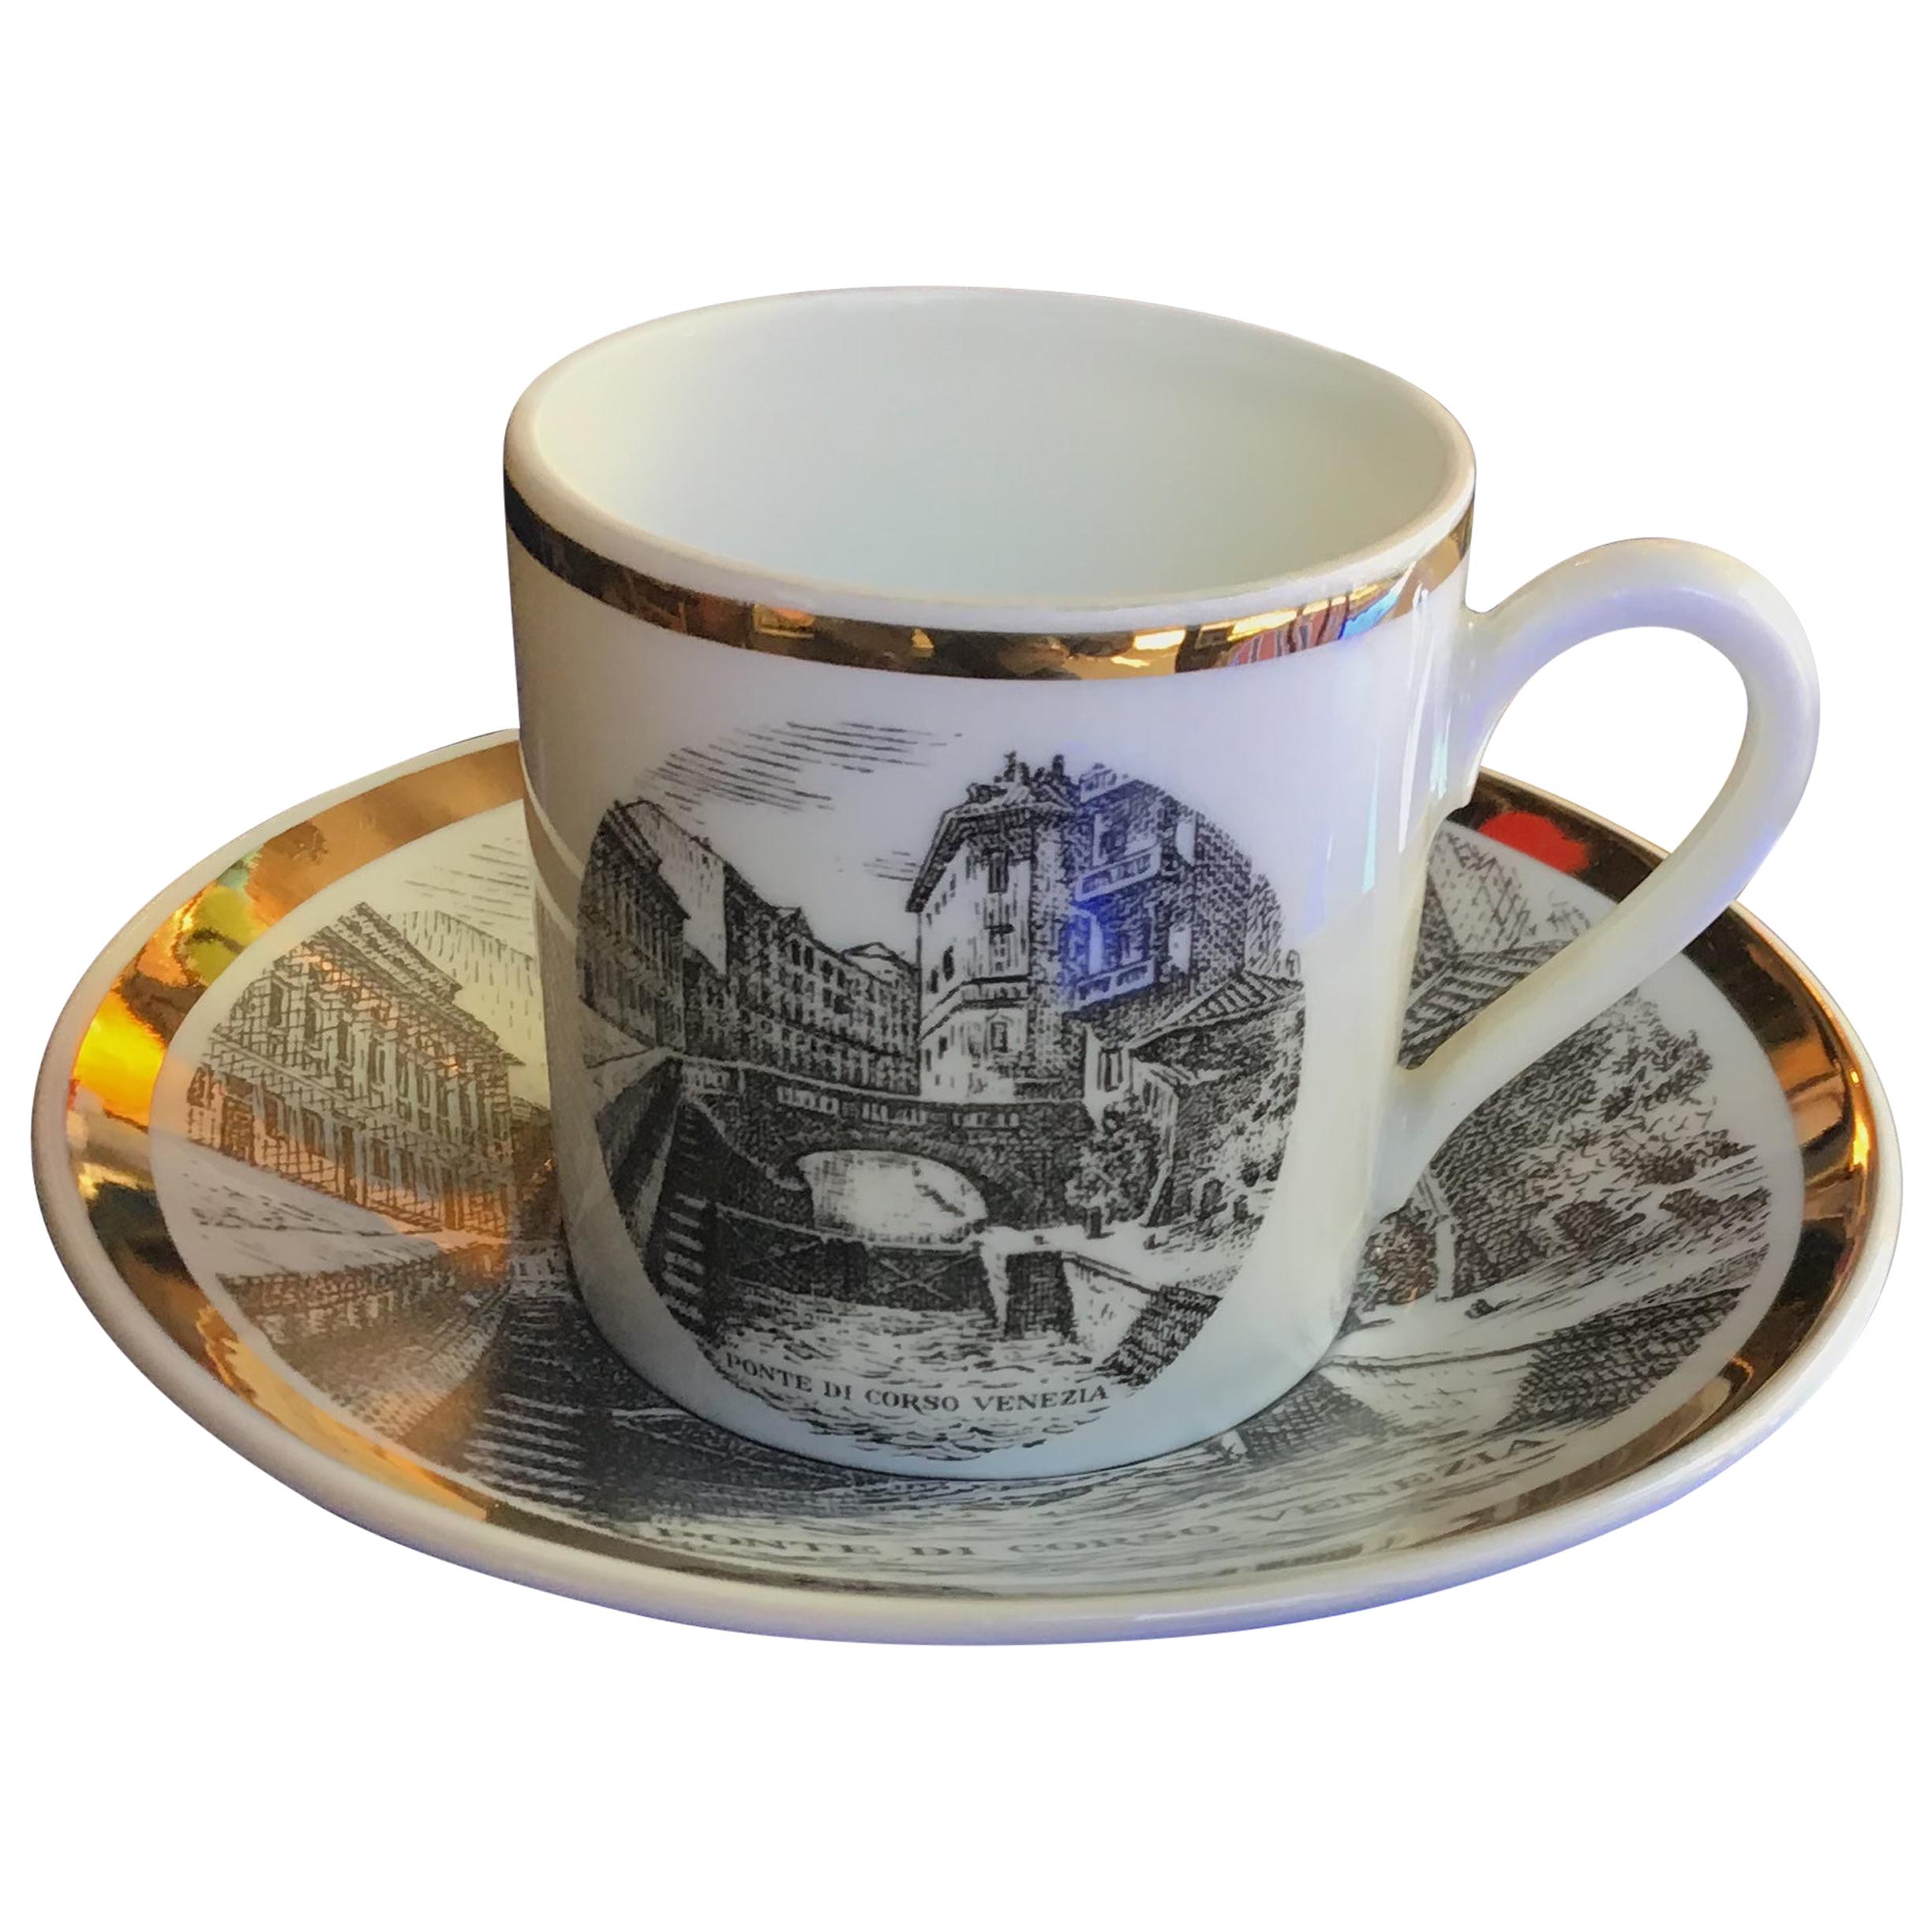 Fornasetti Porcelain Cup of Coffee Gold “Ponte Corso Venezia”, 1950